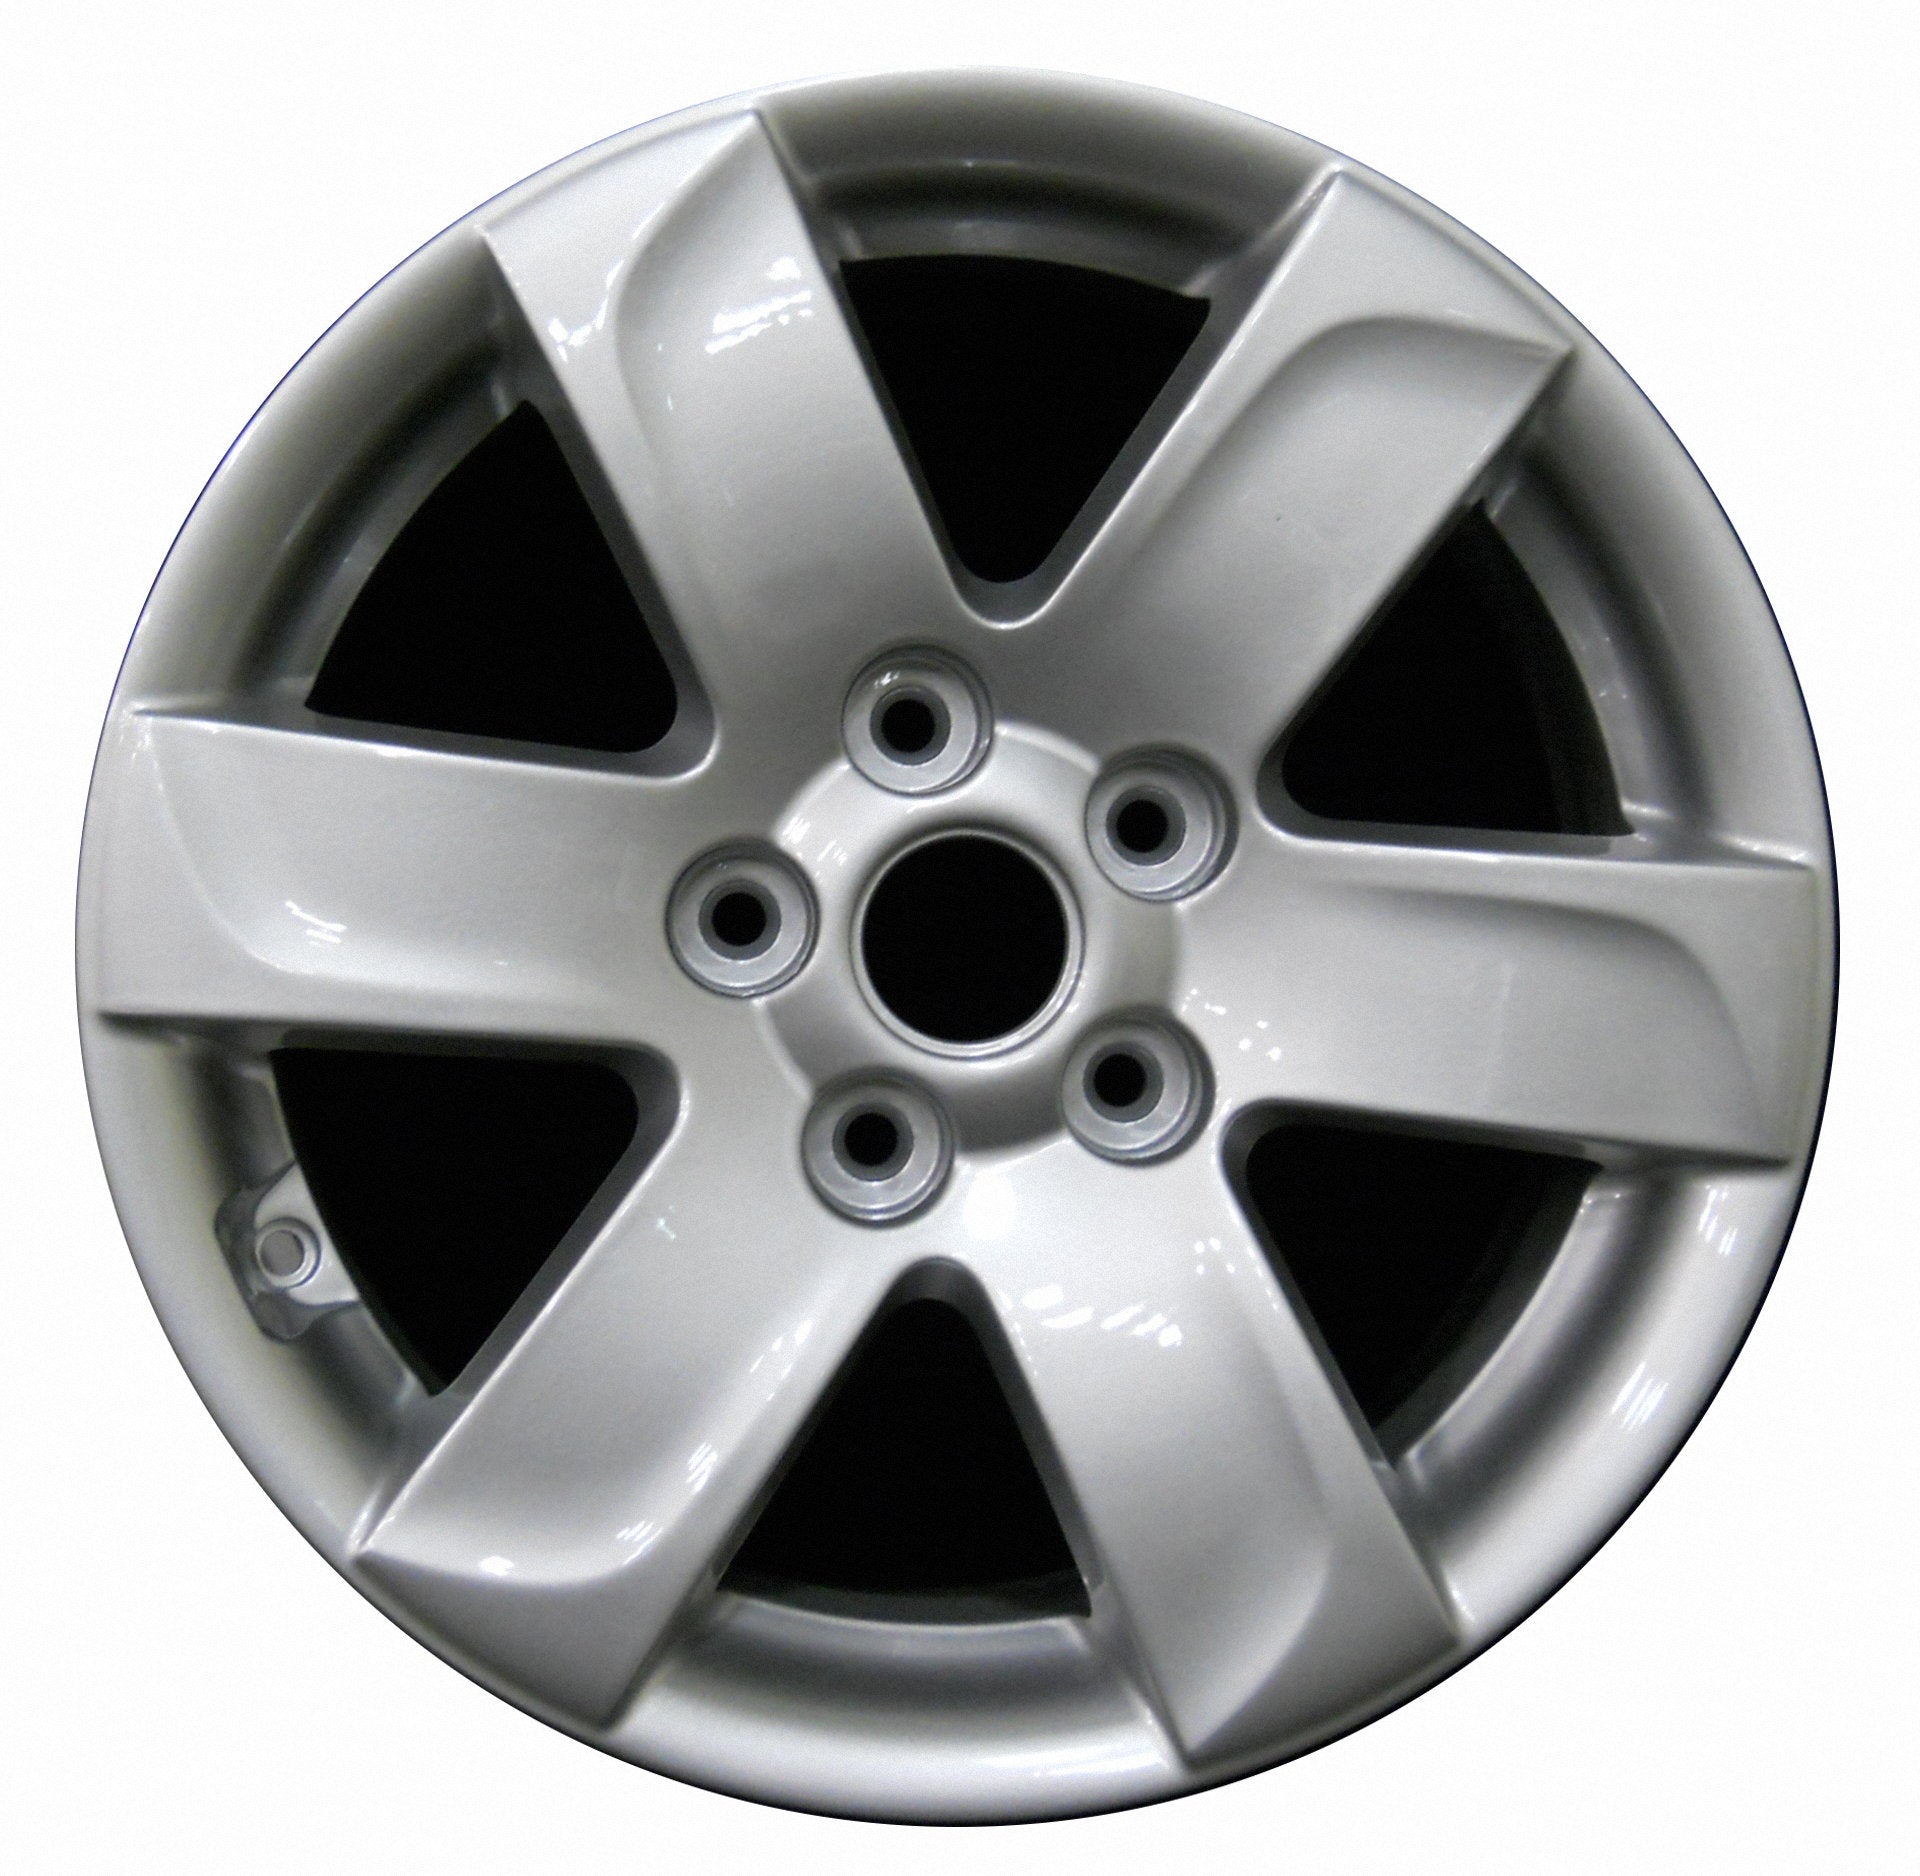 Kia Rondo  2006, 2007, 2008, 2009, 2010, 2011 Factory OEM Car Wheel Size 16x6.5 Alloy WAO.74590.LS16.FF